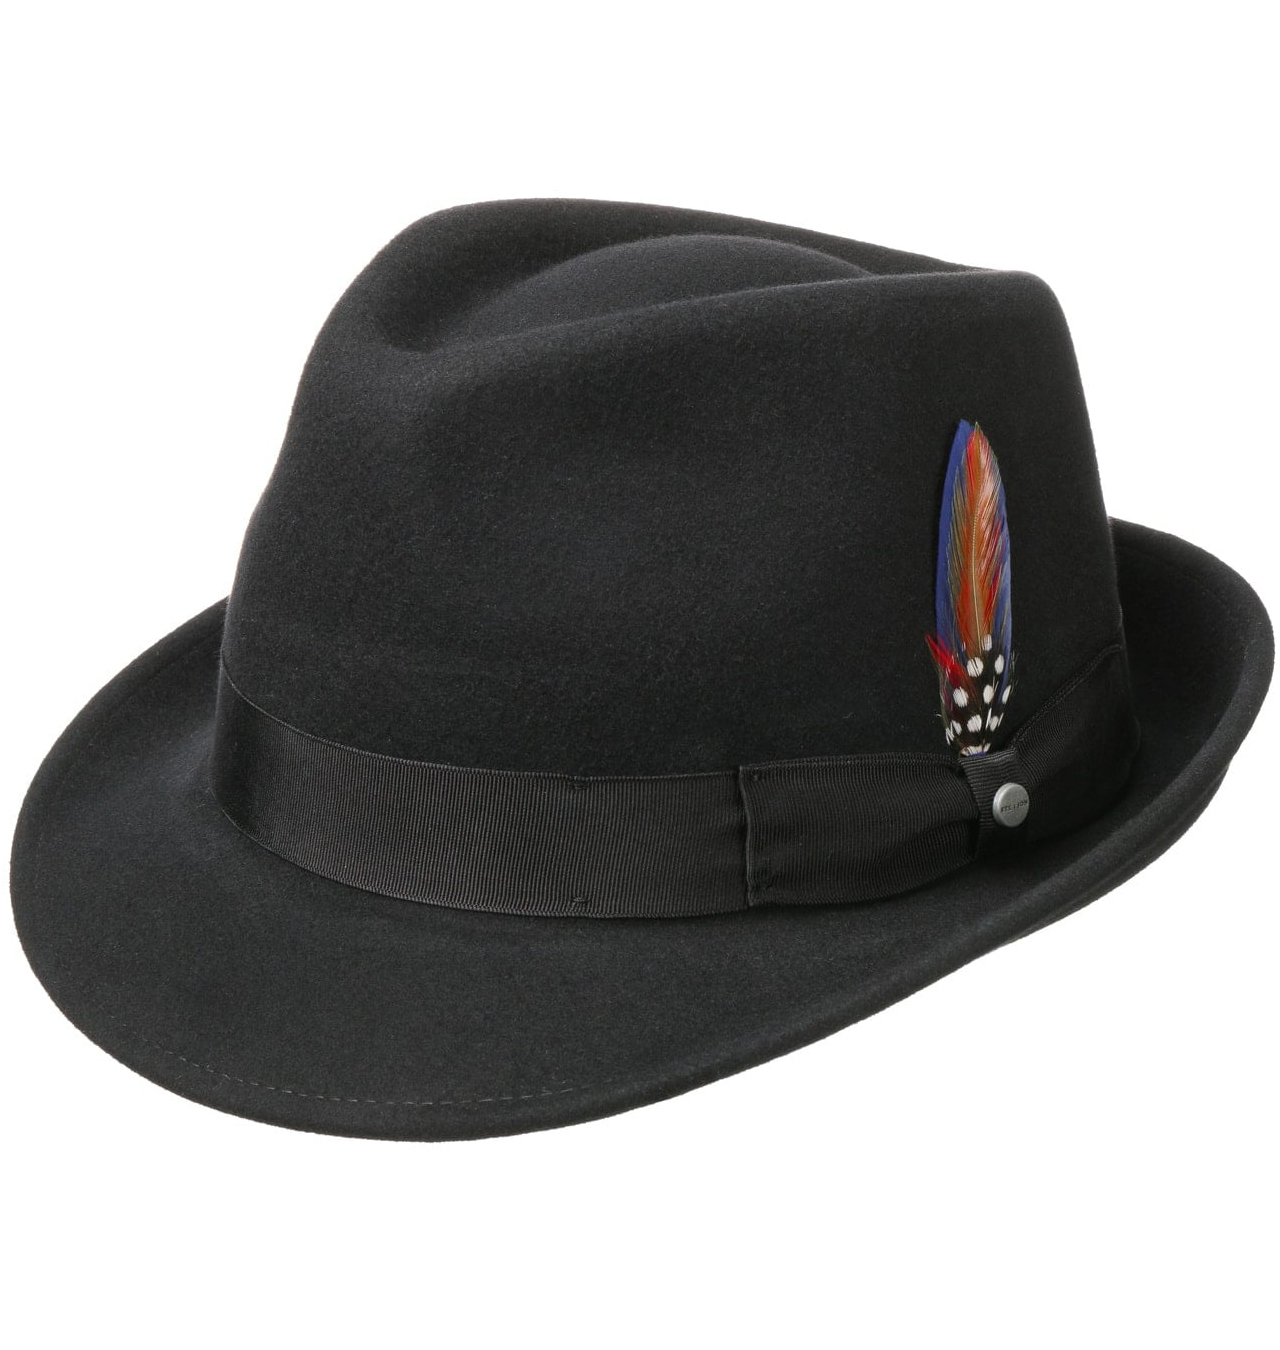 Stetson - Elkader Trilby Felt Hat - Black